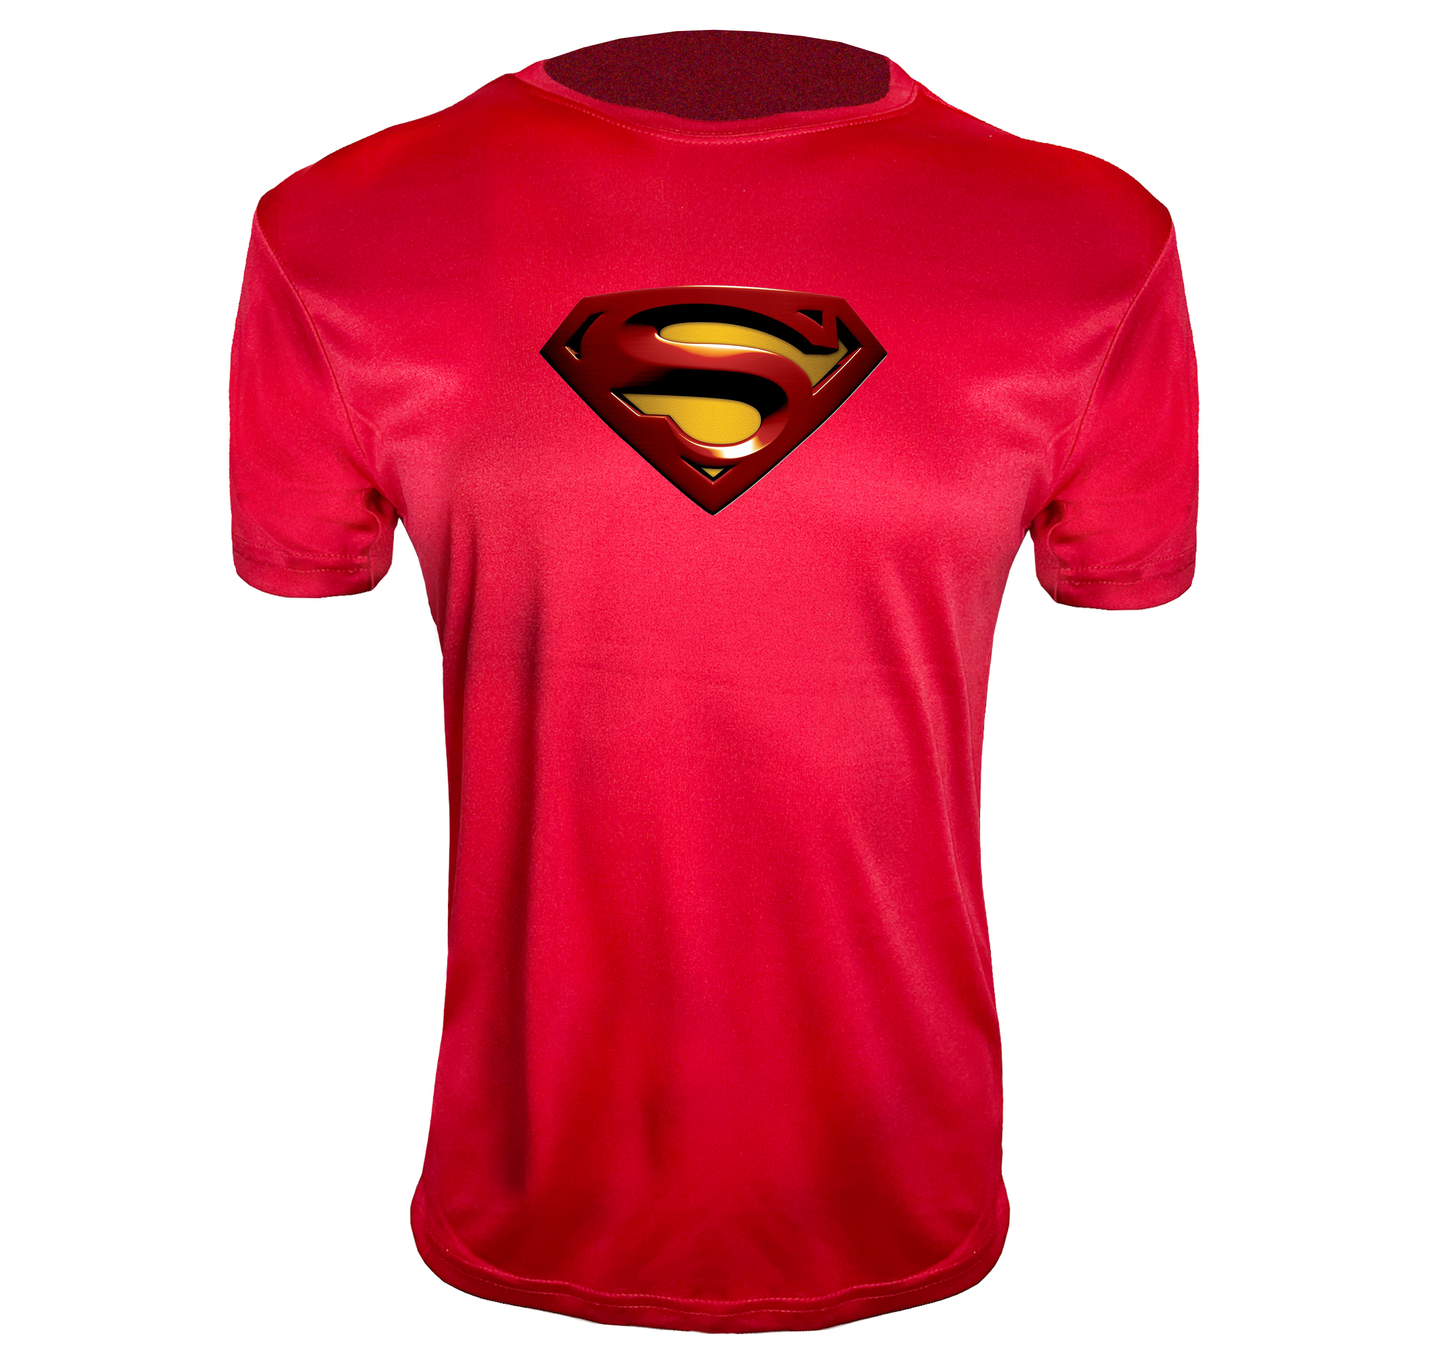 Youth Kids Superman Superhero Performance T-Shirt